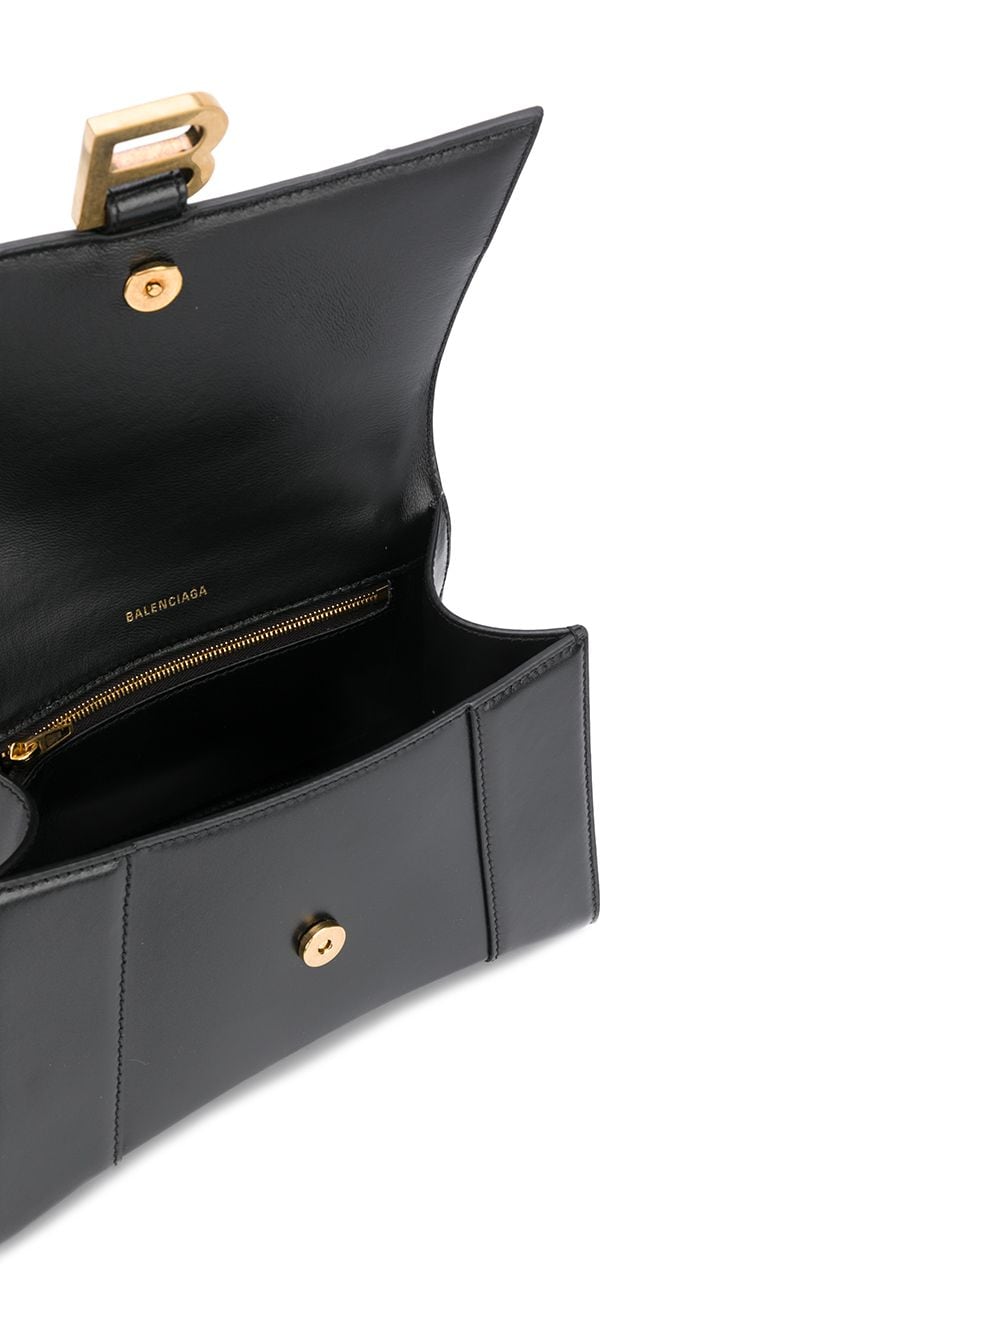 Balenciaga Hourglass Wallet on Chain Black Glitter Clutch Shoulder Bag